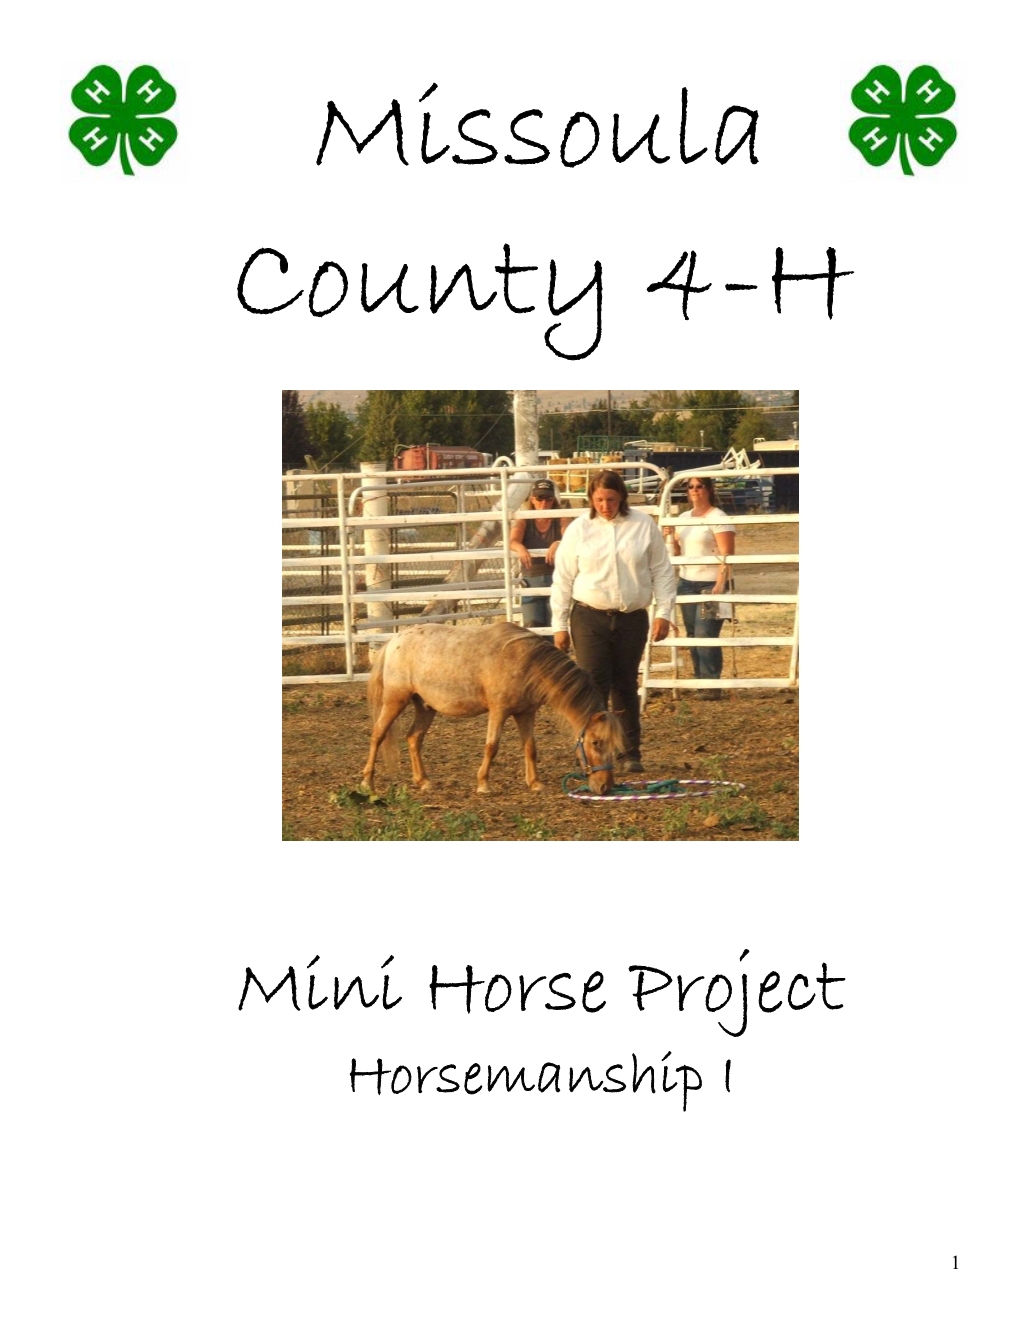 Mini Horse Project Horsemanship I